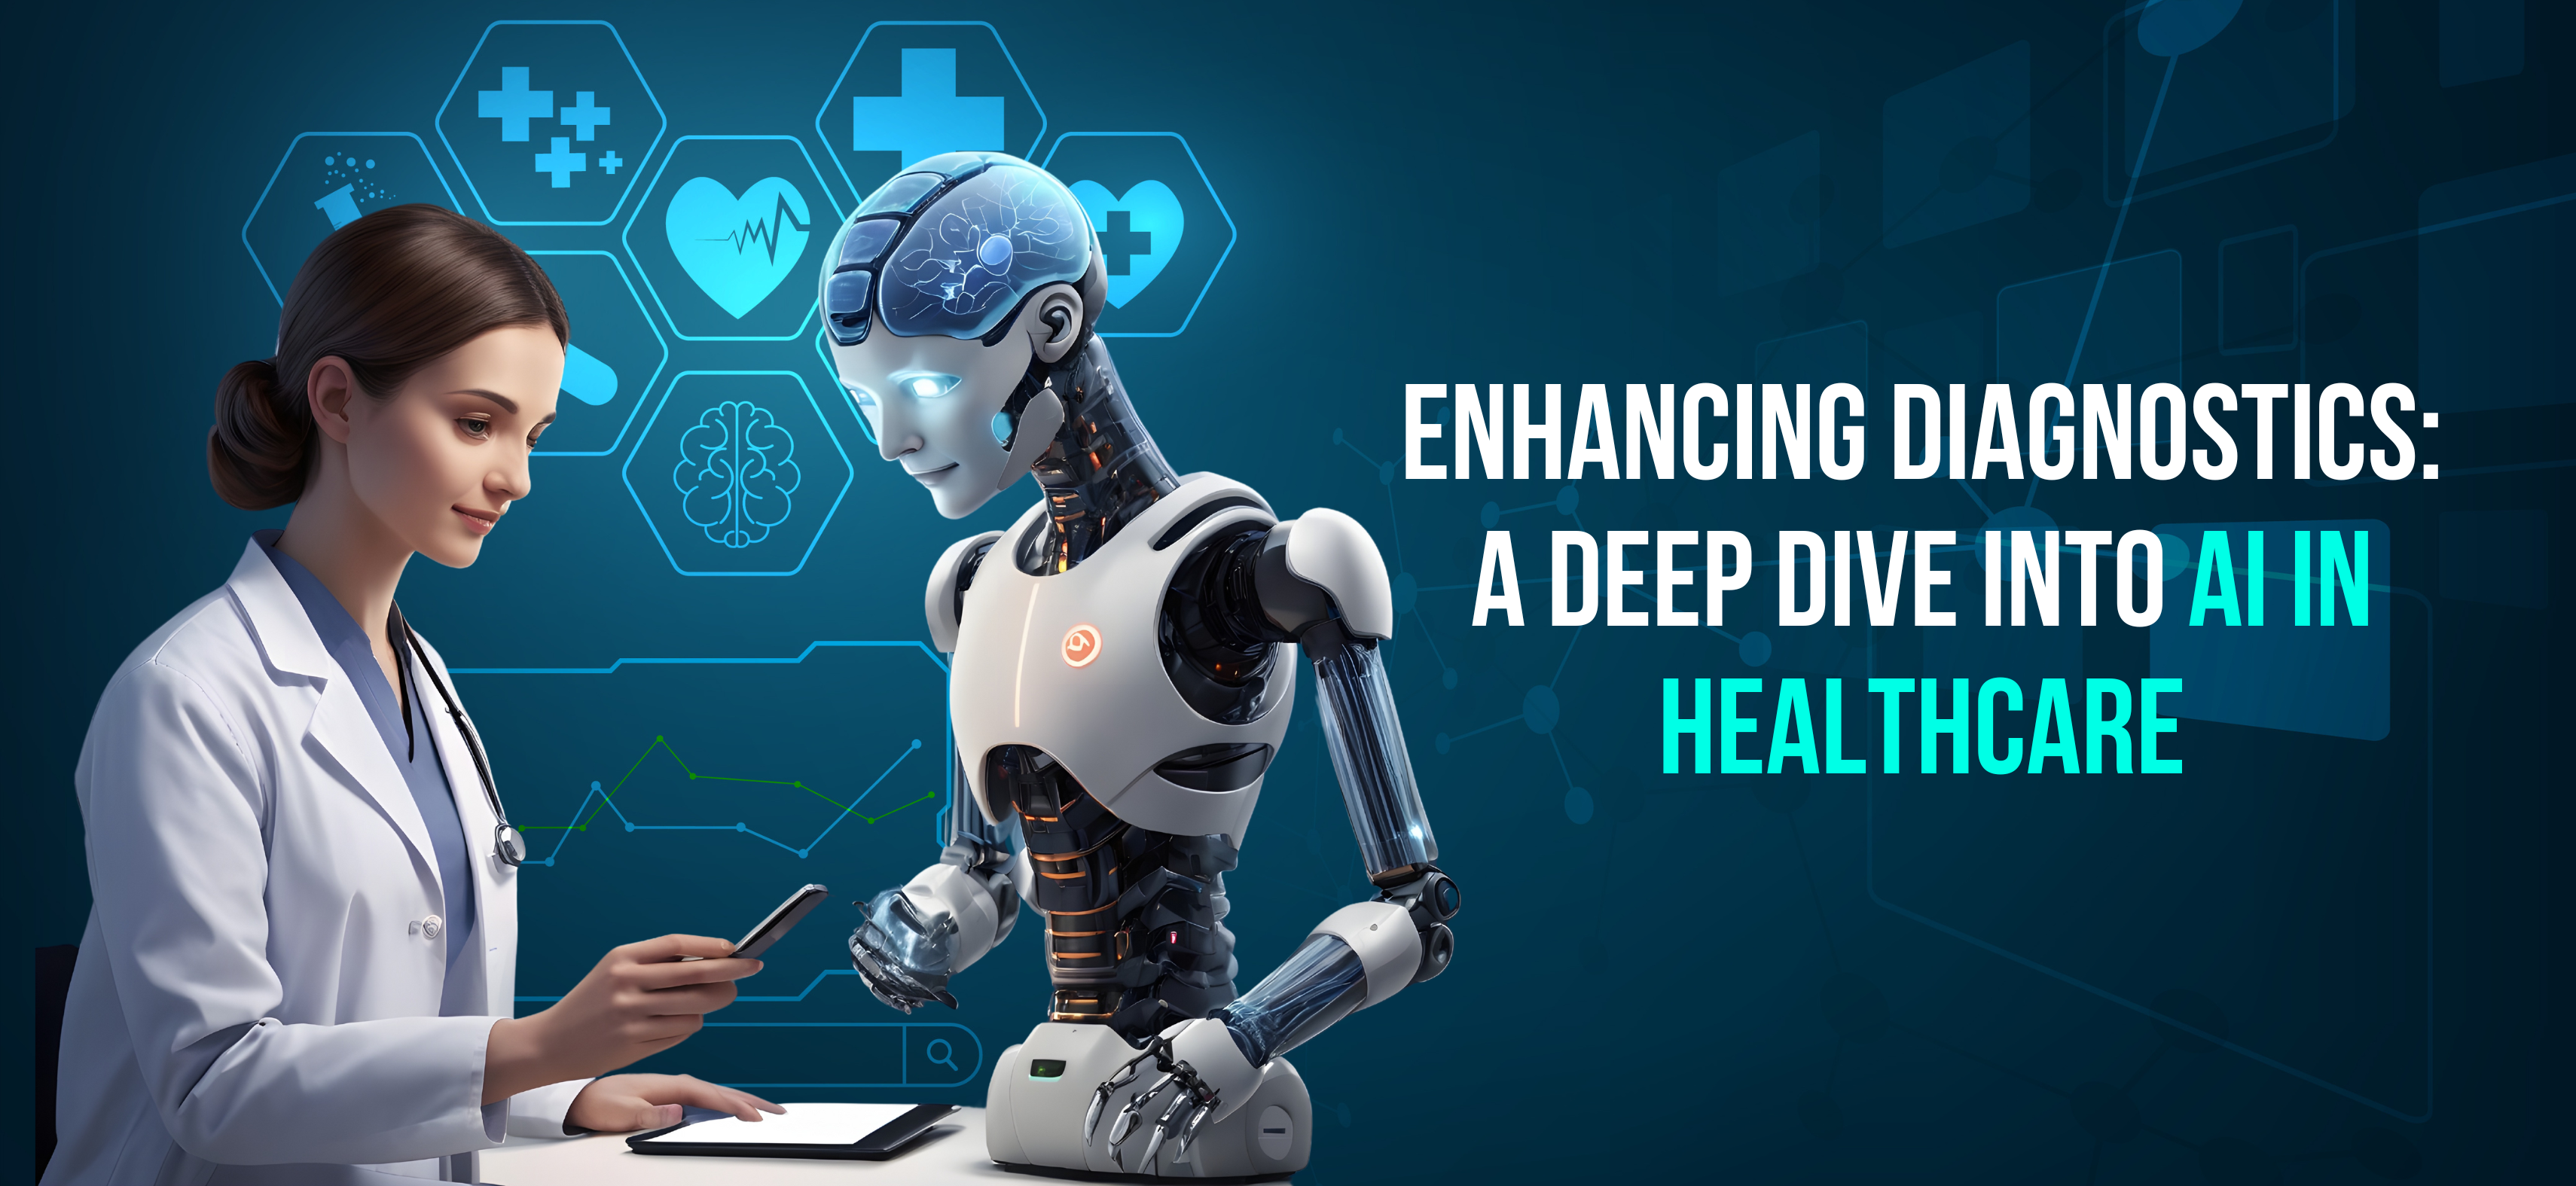 Enhancing Diagnostics: A Deep Dive into AI in Healthcare - Internet Soft